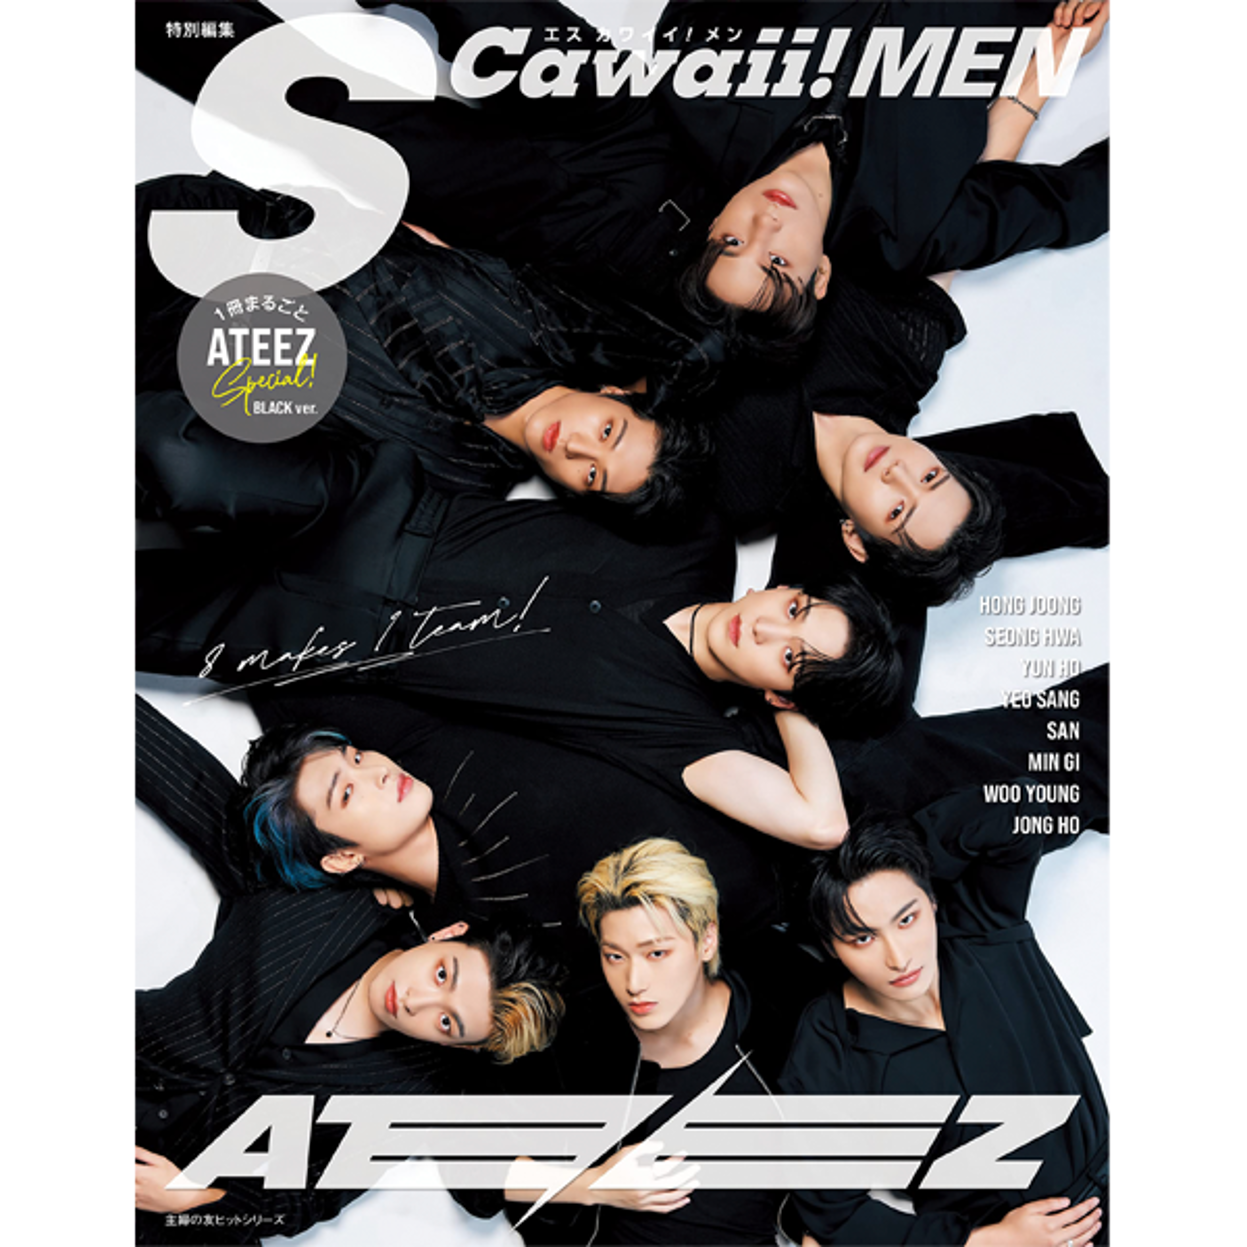 SCawaii! MEN 특별편집판 ATEEZ Special (일본잡지) (BLACK ver.)